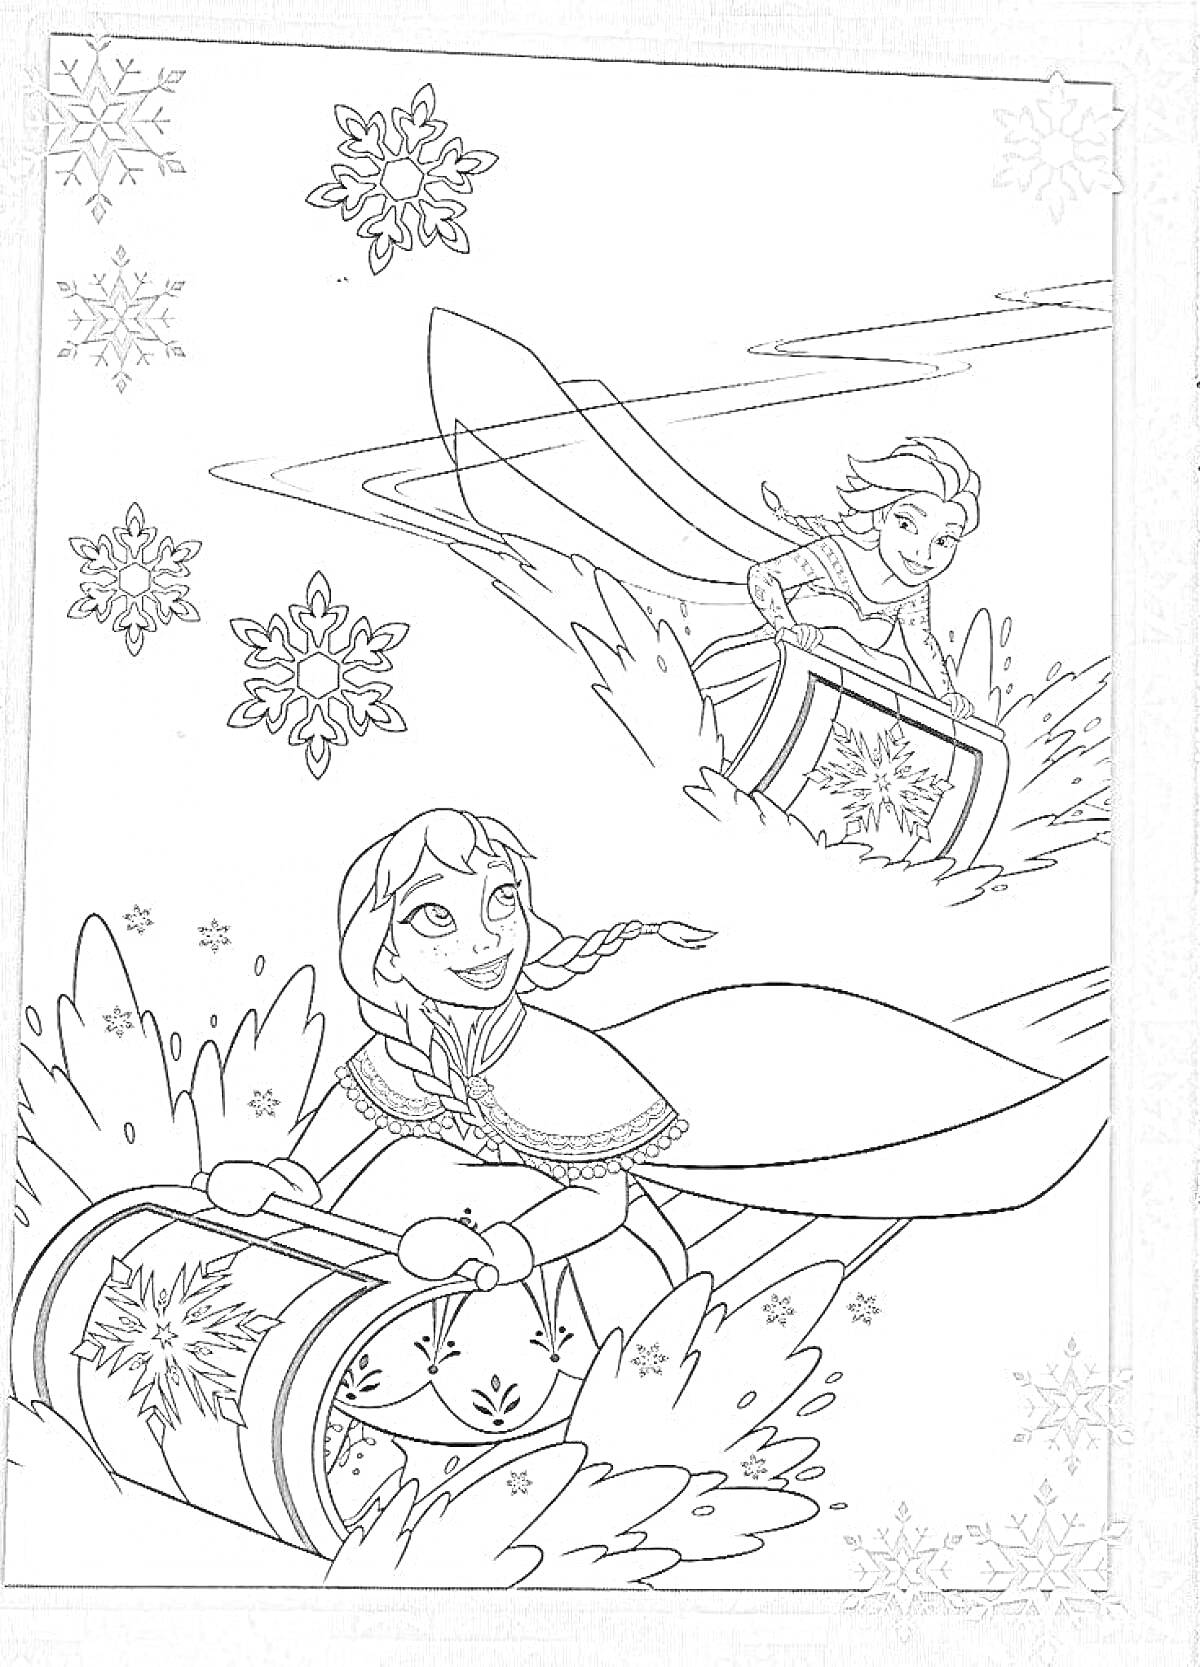 Раскраска Снежная королева и принцесса на санях среди снежинок